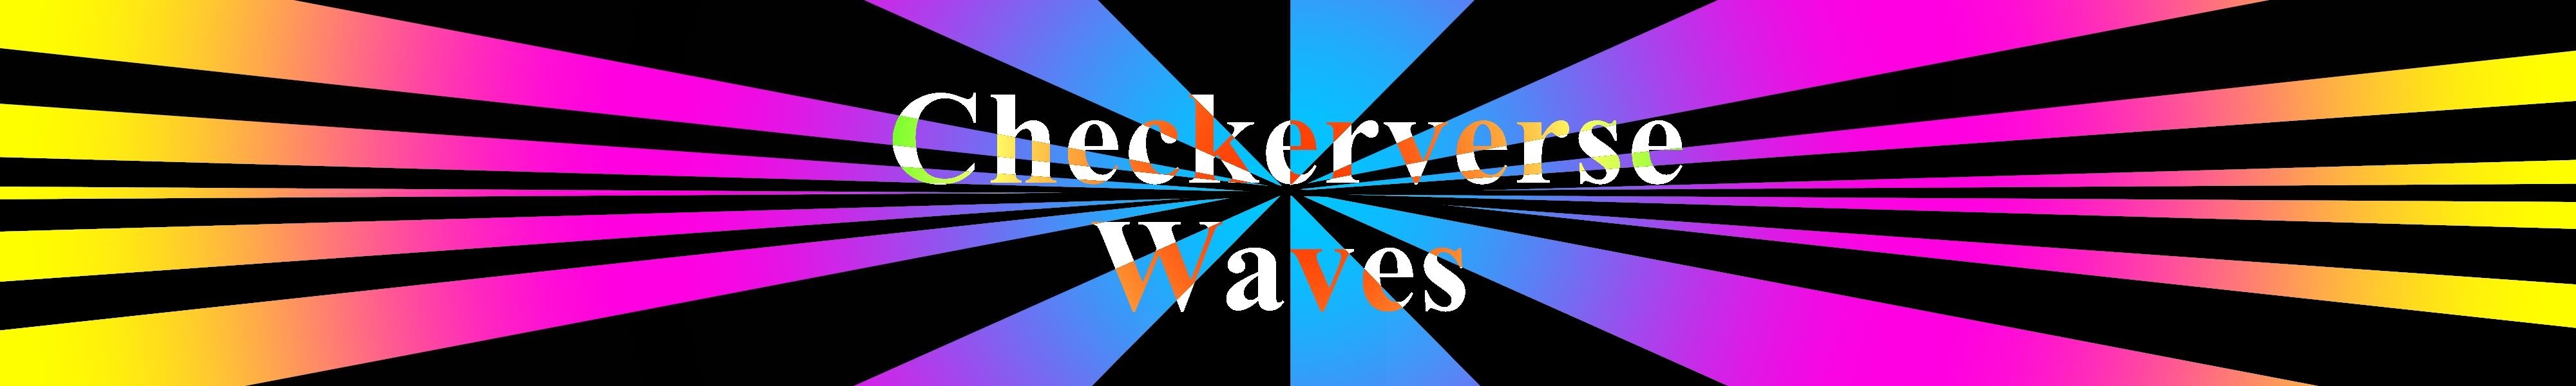 Checkerverse Waves banner